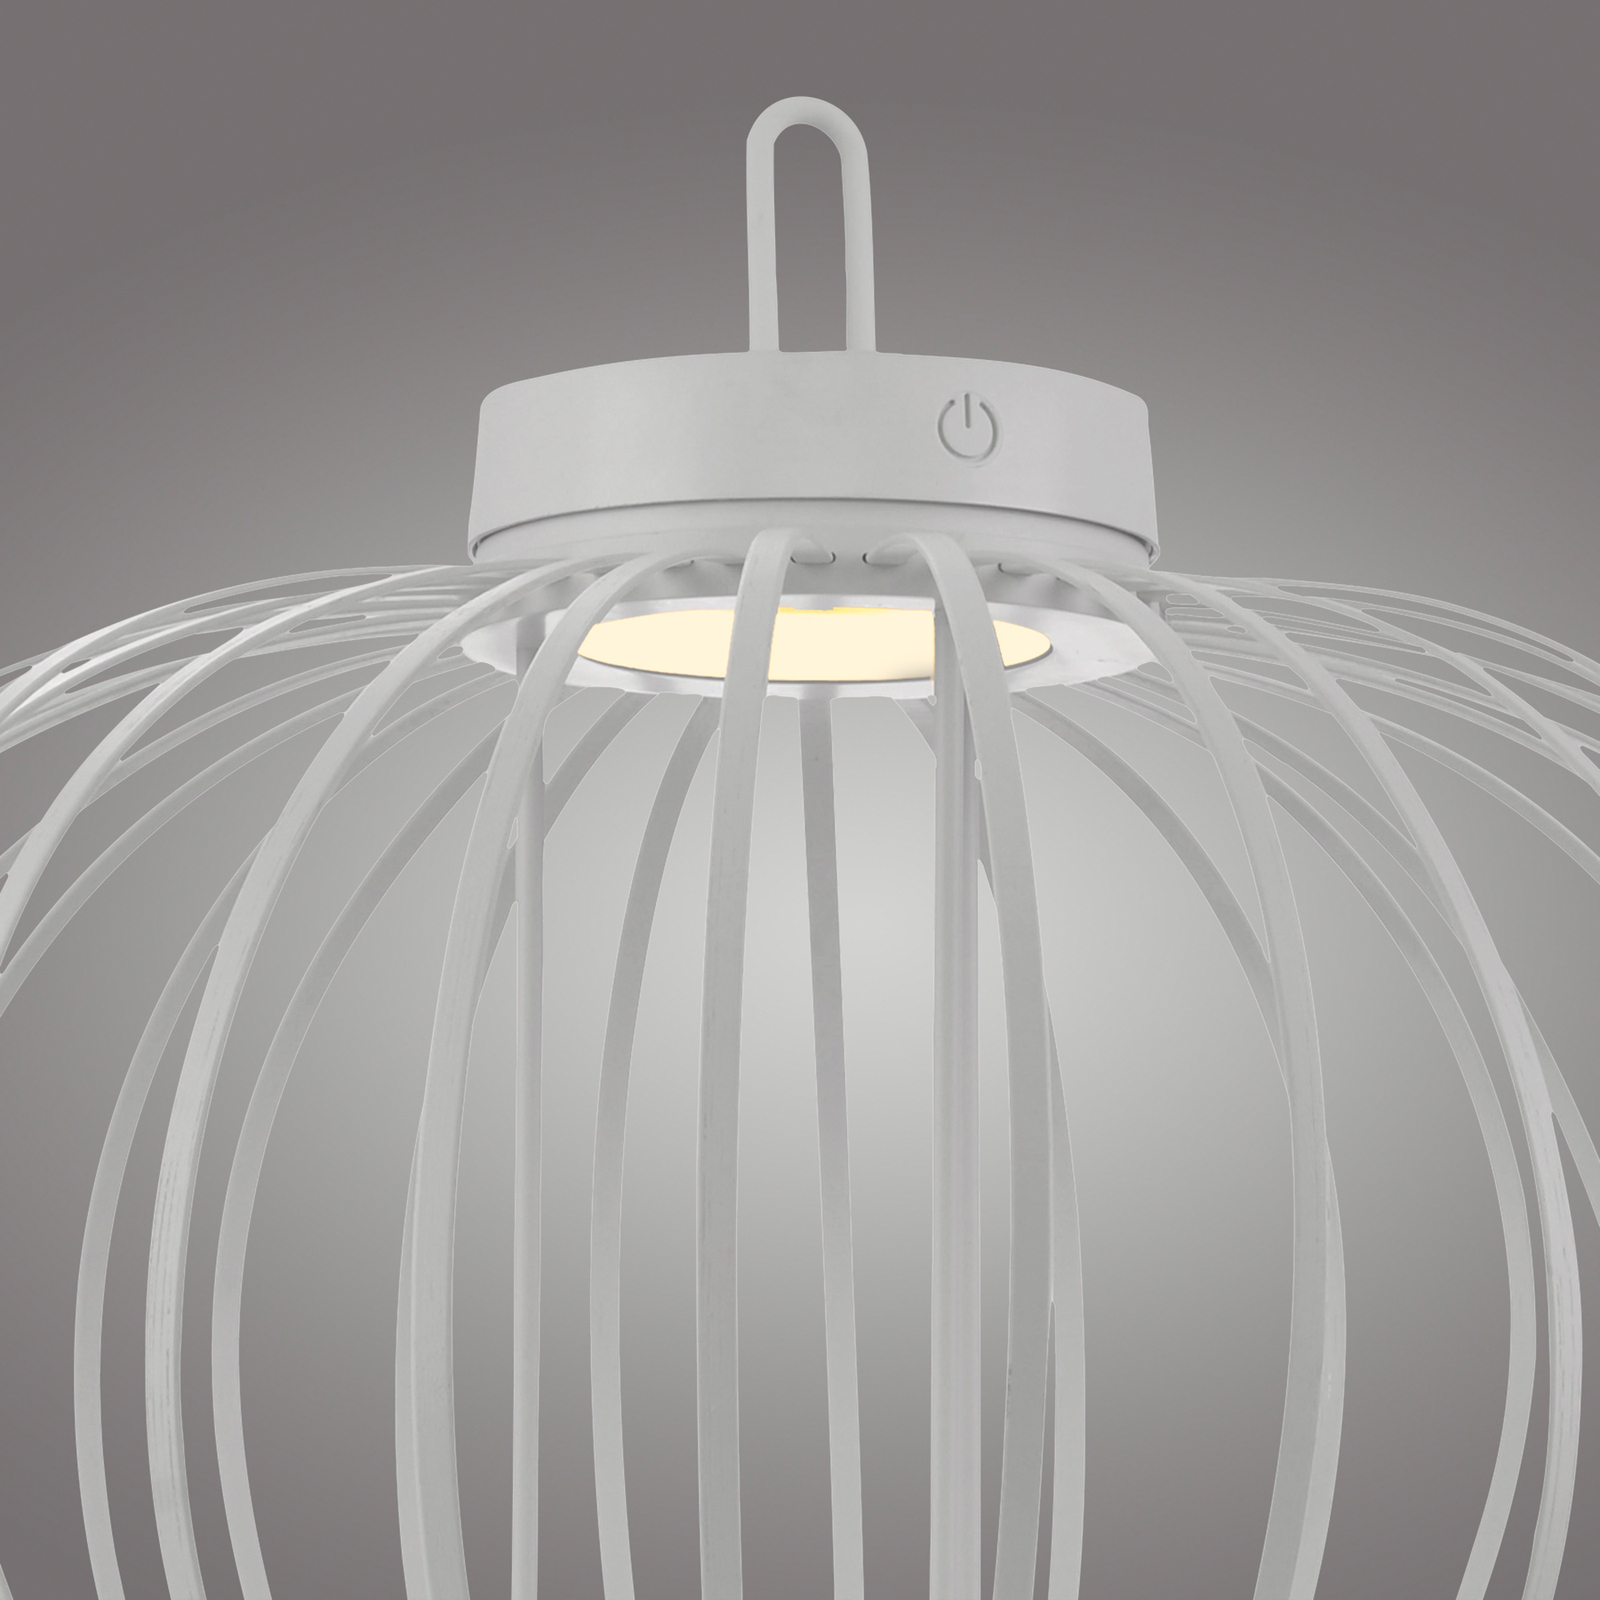 JUST LIGHT. Akuba LED tafellamp, wit, 37 cm, bamboe